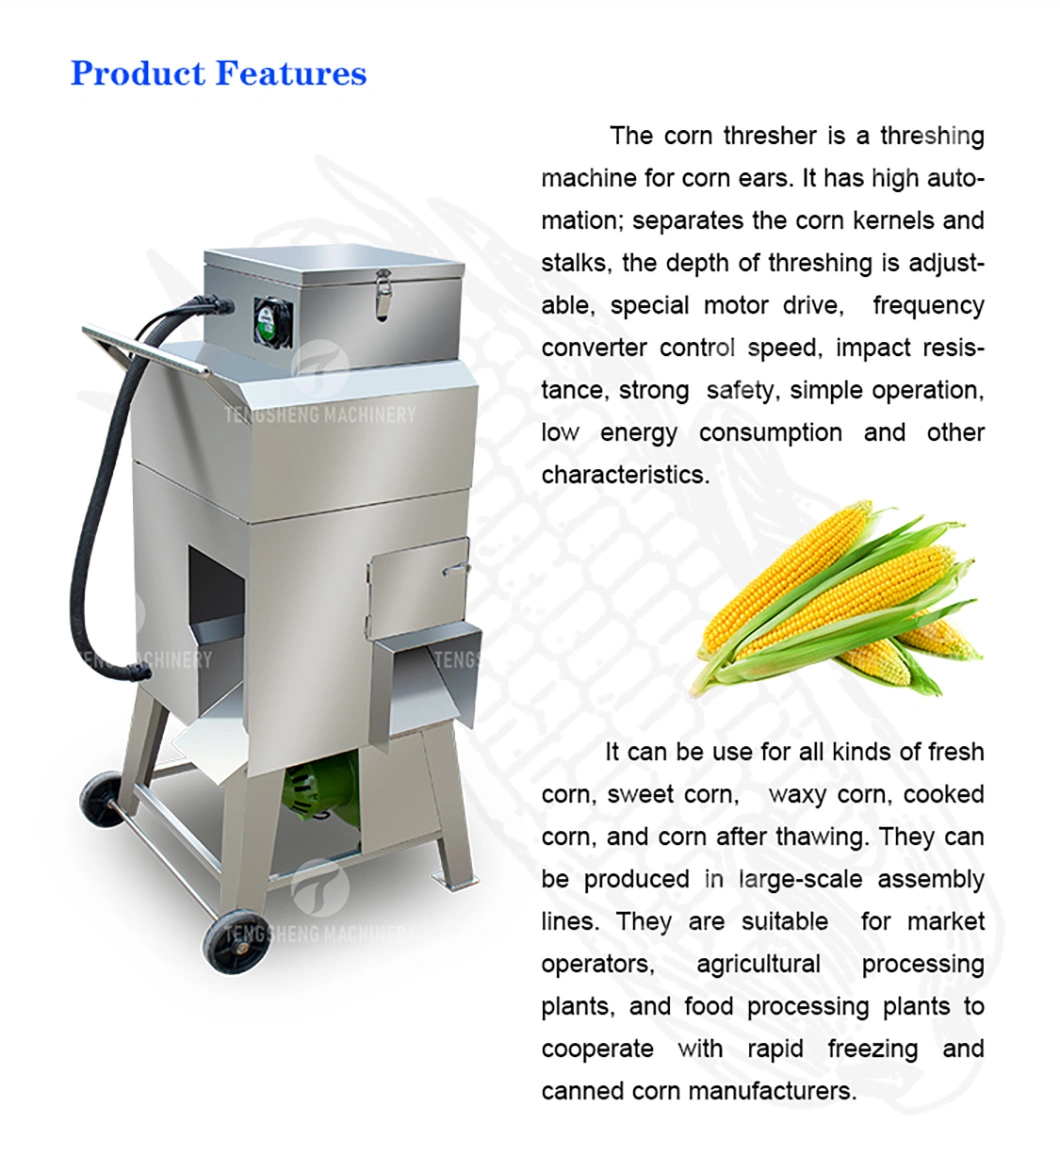 Fresh Corn Sheller Equipment Commercial Full-Automatic Sweet Corn Thresher Machine (TS-W168)